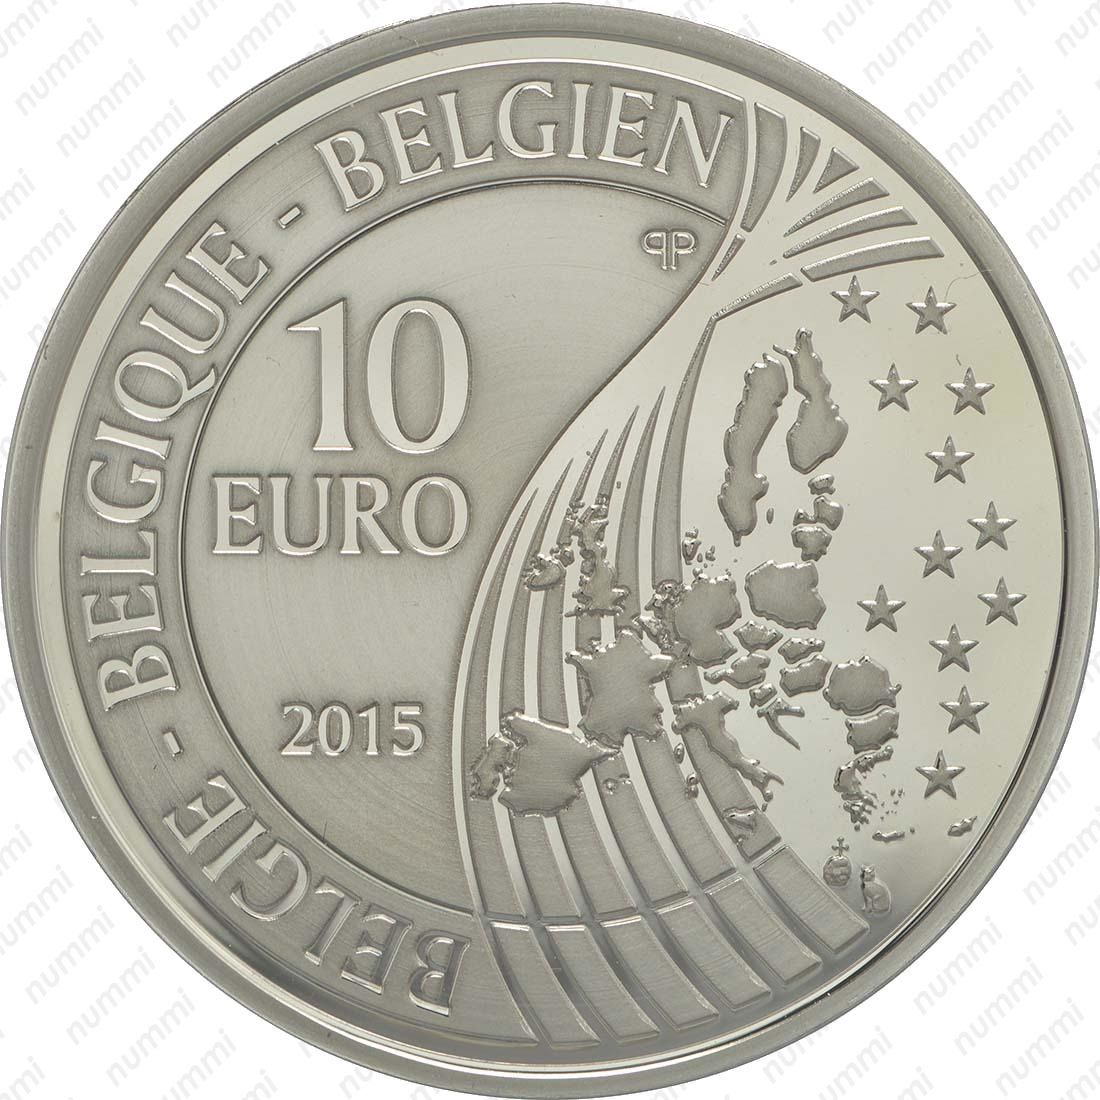 Купить 70 евро. 20 Euro. 10 Евро. 10 Евро 2015. 10 Евро железные.